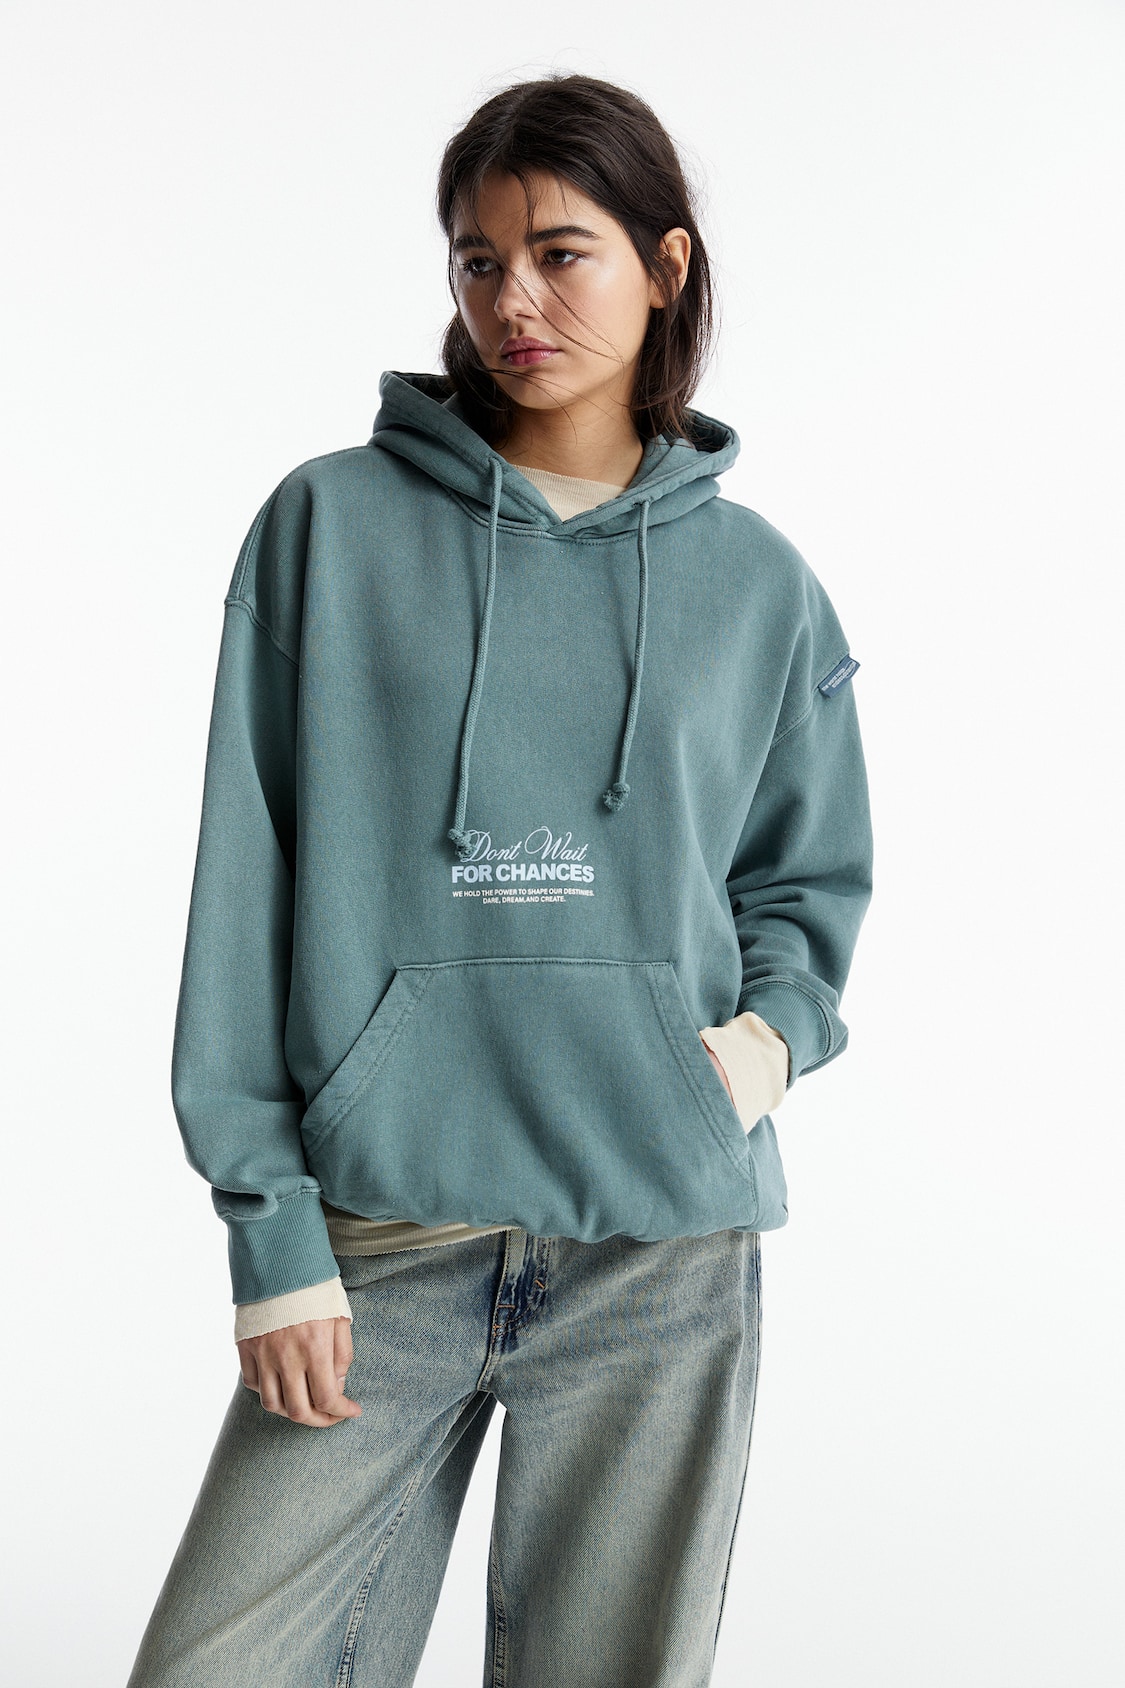 Sweatshirt double logo velvet hoodie for women Project X Paris - Sweatshirts  - Women's Lifestyle - Lifestyle